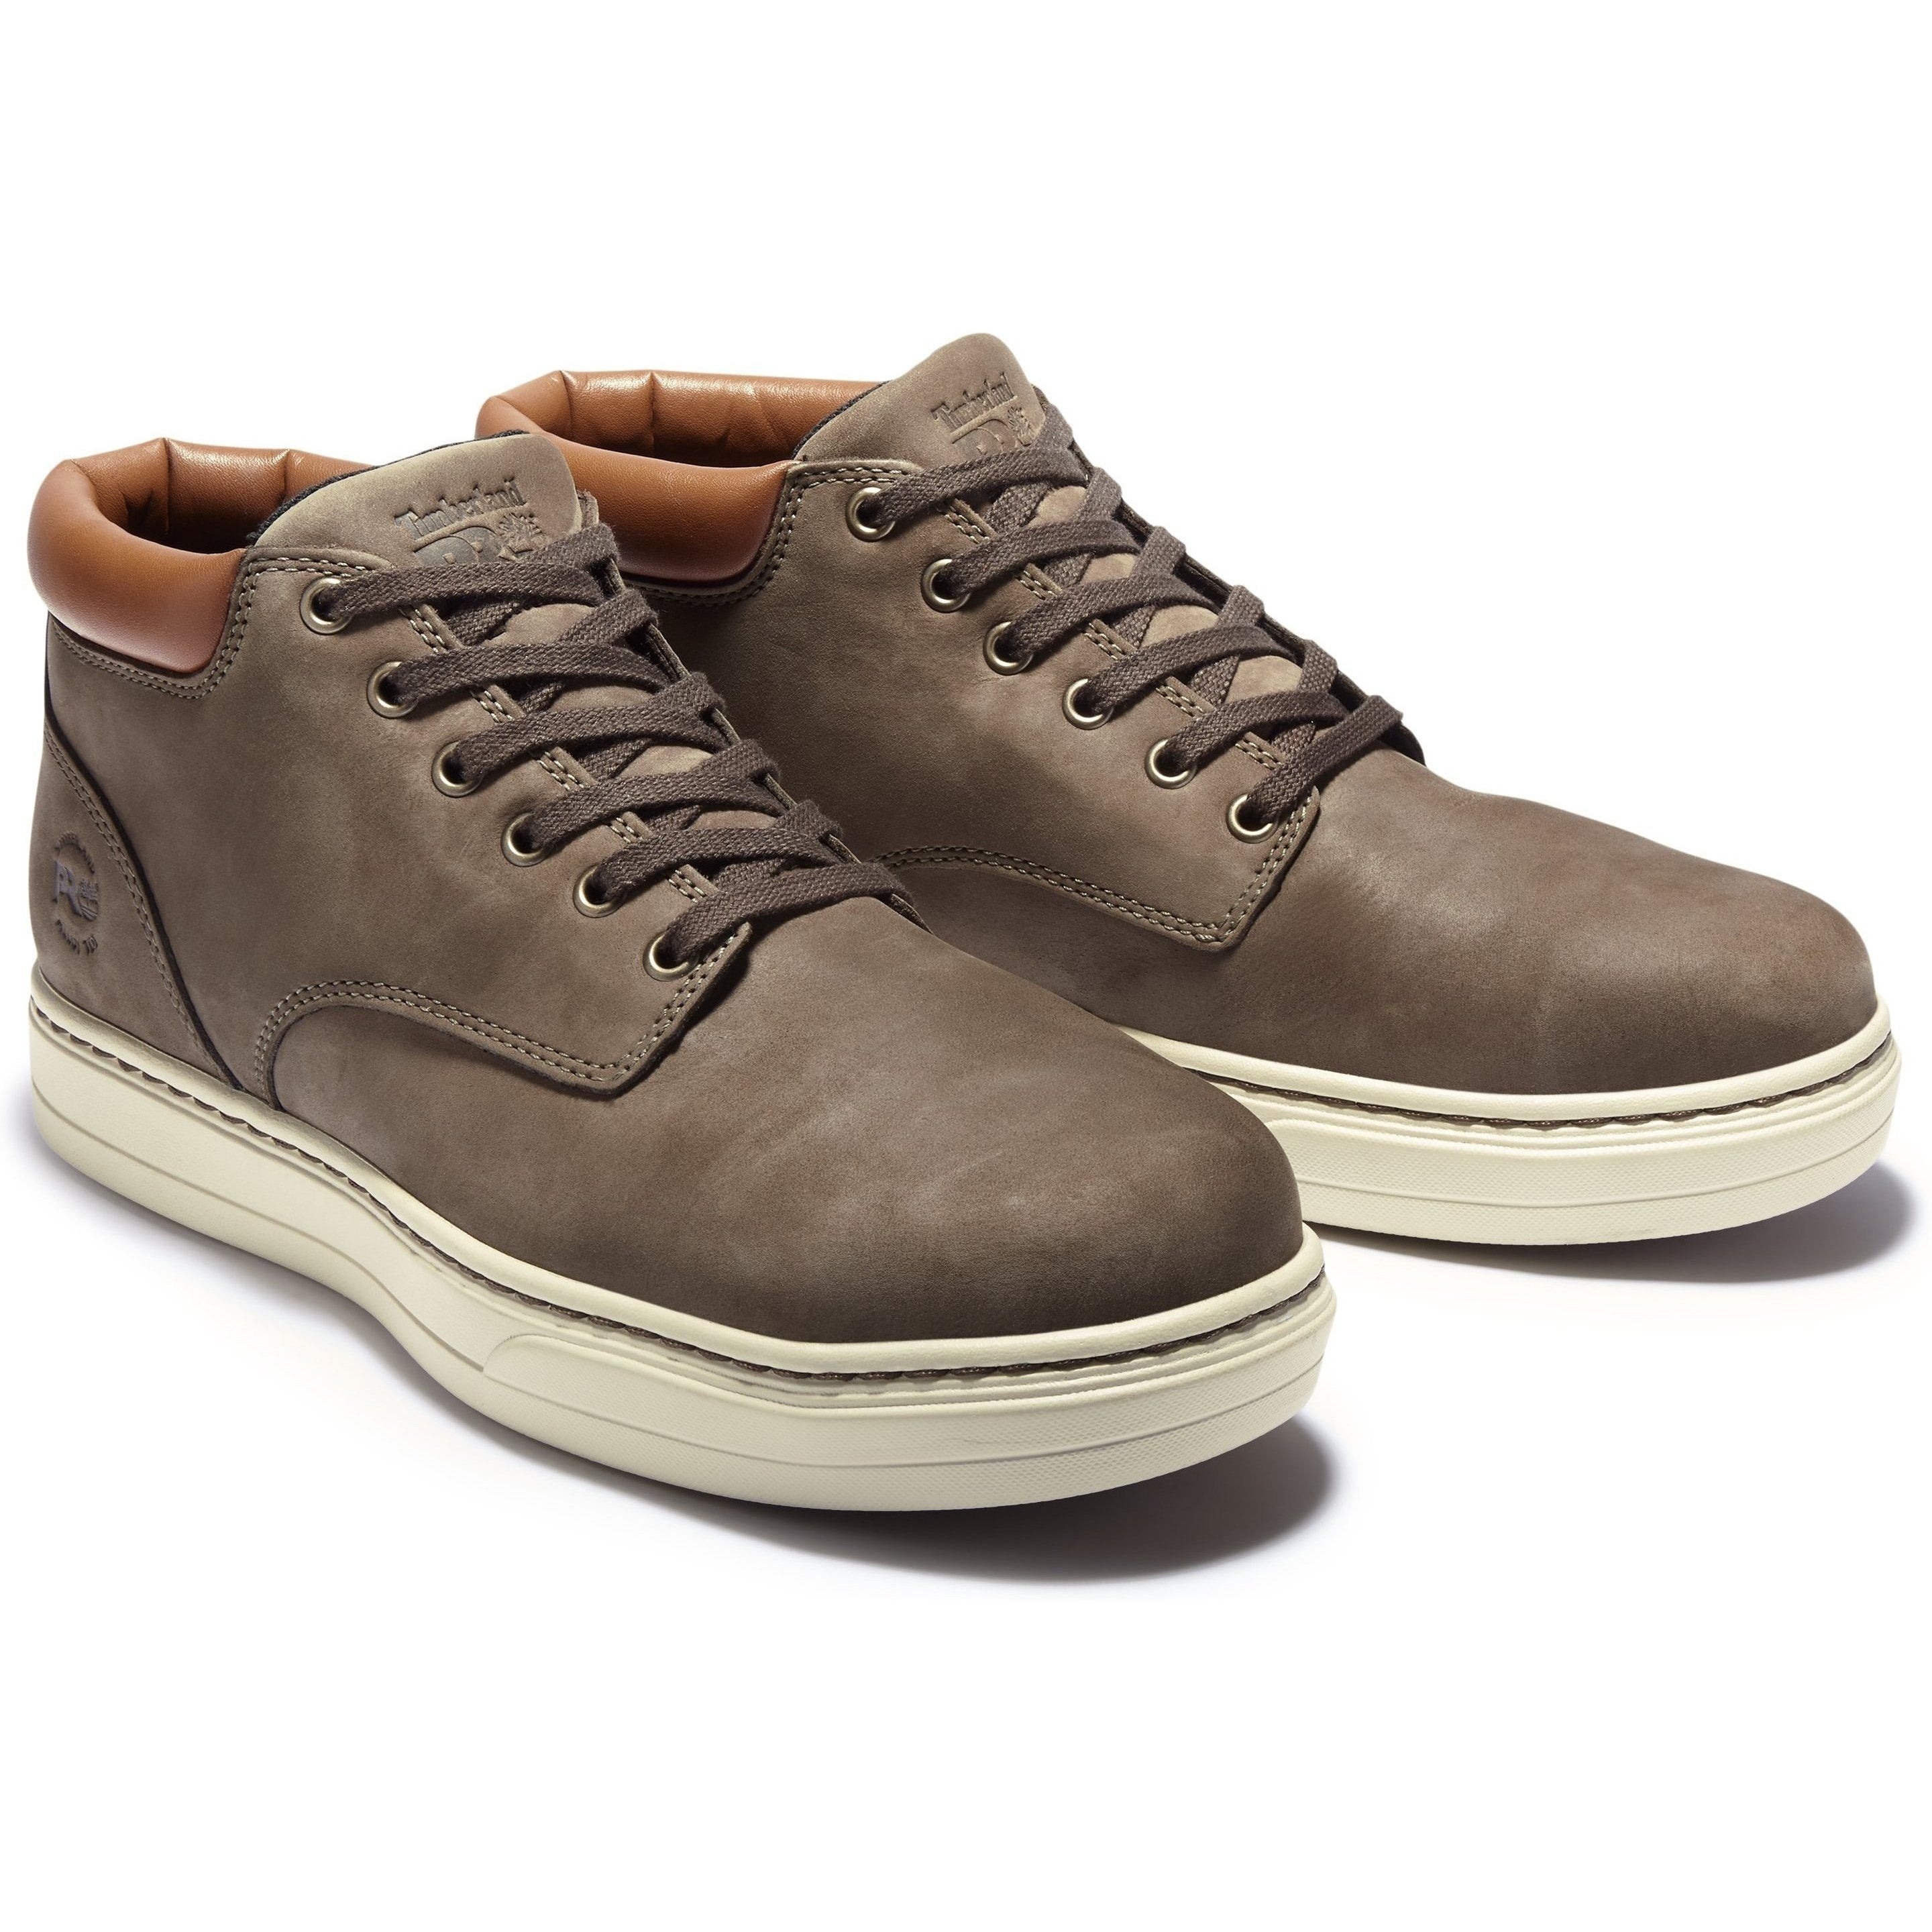 Timberland PRO Men's Disruptor Alloy Toe Work Shoe -Brown TB0A1BAB214 7 / Medium / Brown - Overlook Boots